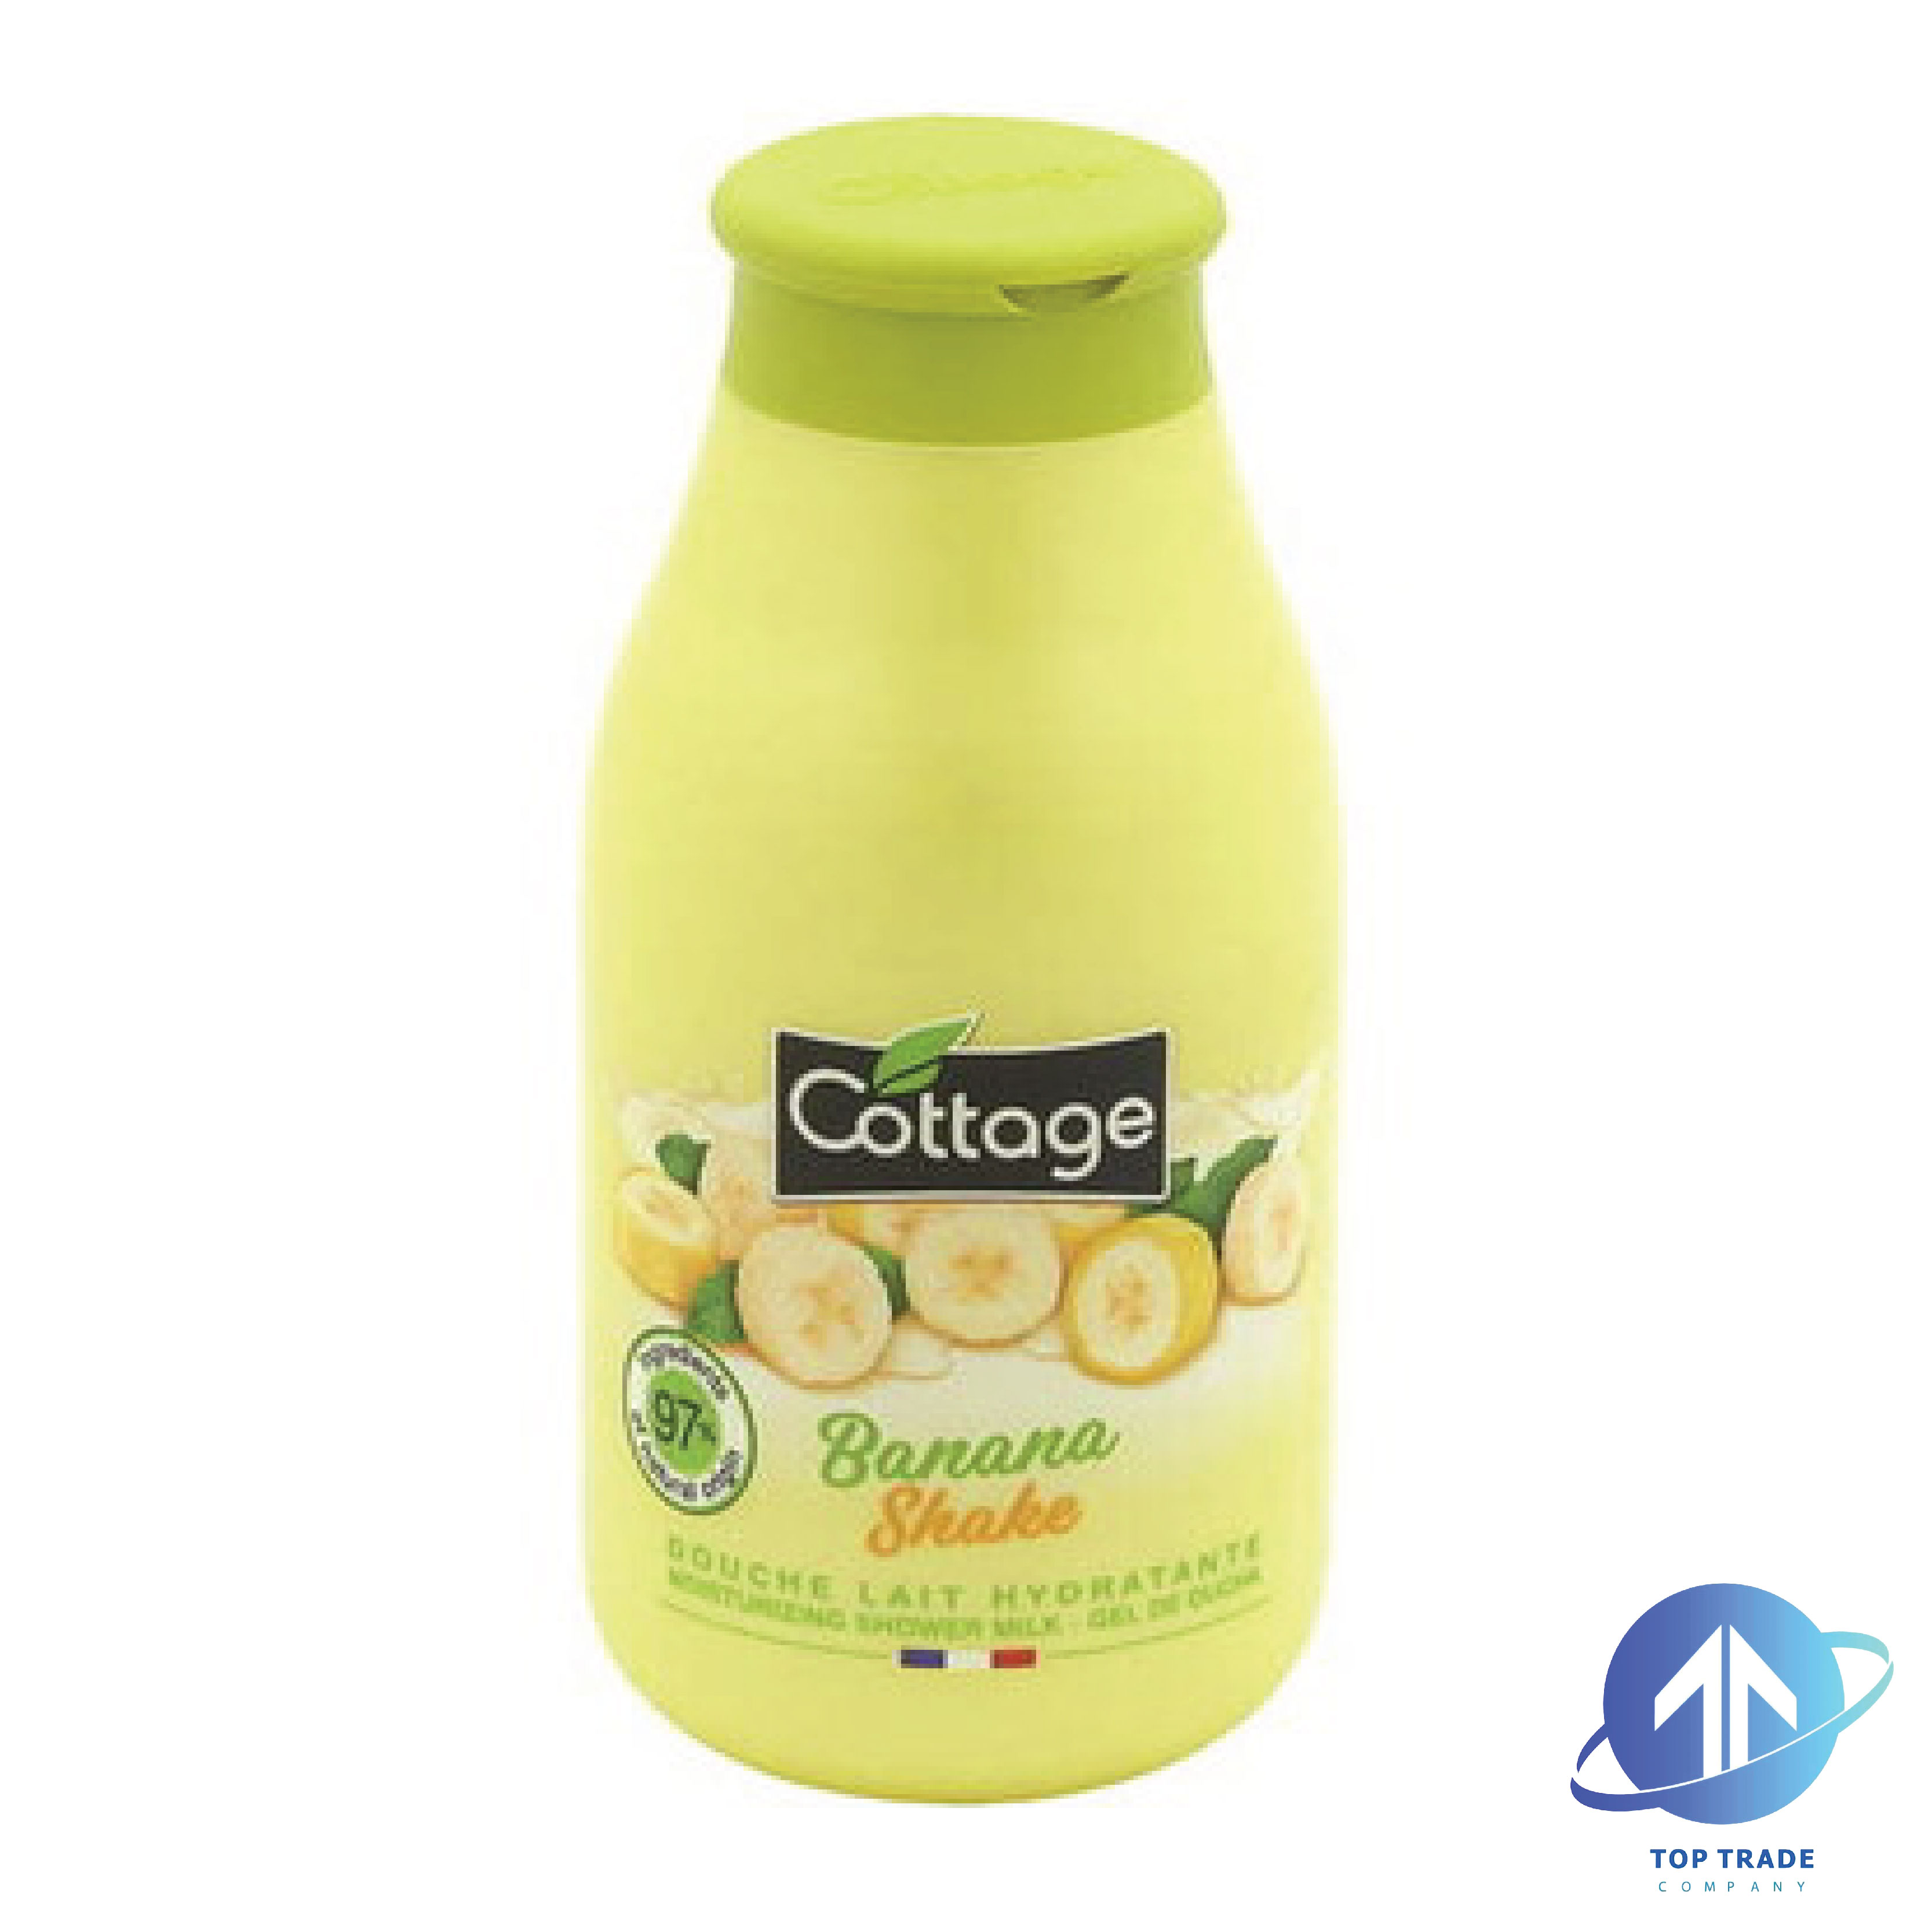 Cottage shower milk Banana Shake Arabic label 250ml